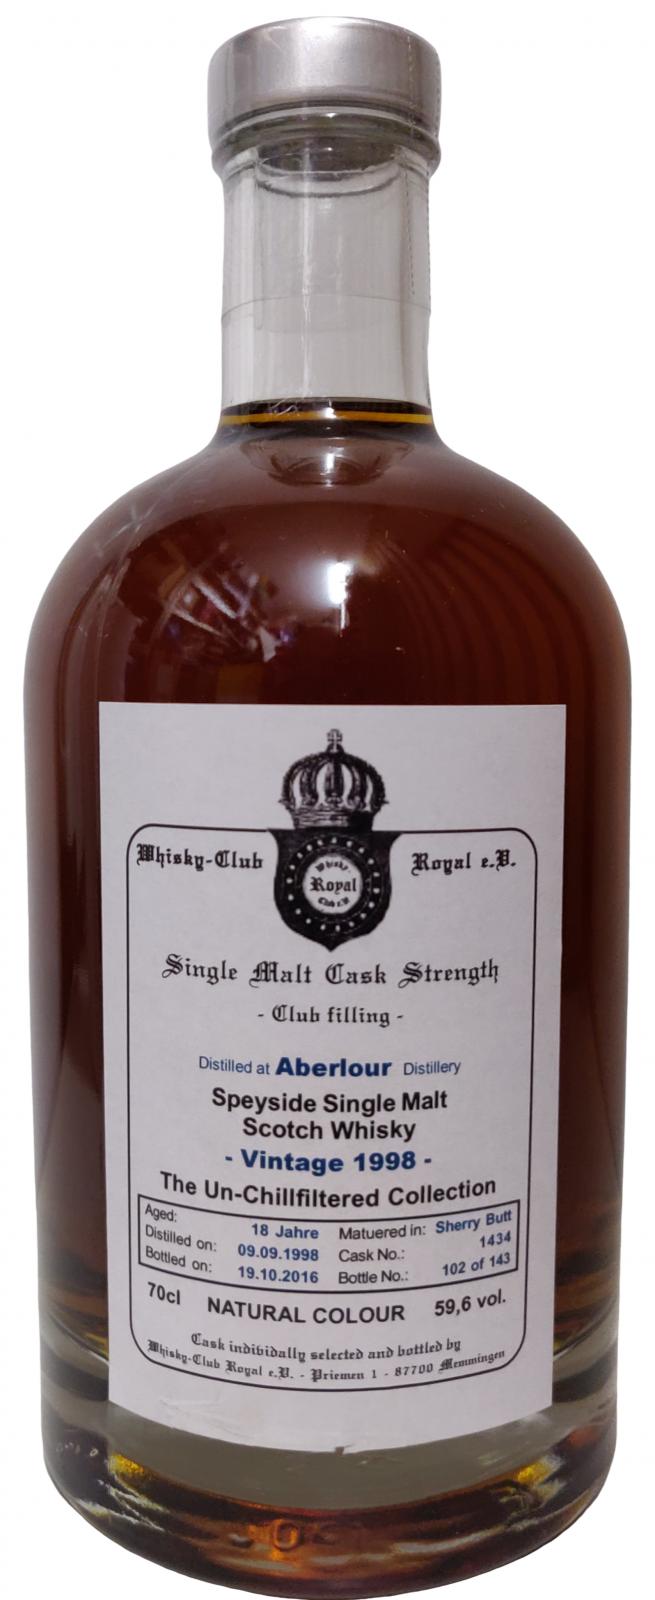 Aberlour 1998 WCR Club filling 1st Fill Oloroso Sherry Butt #1434 59.6% 700ml